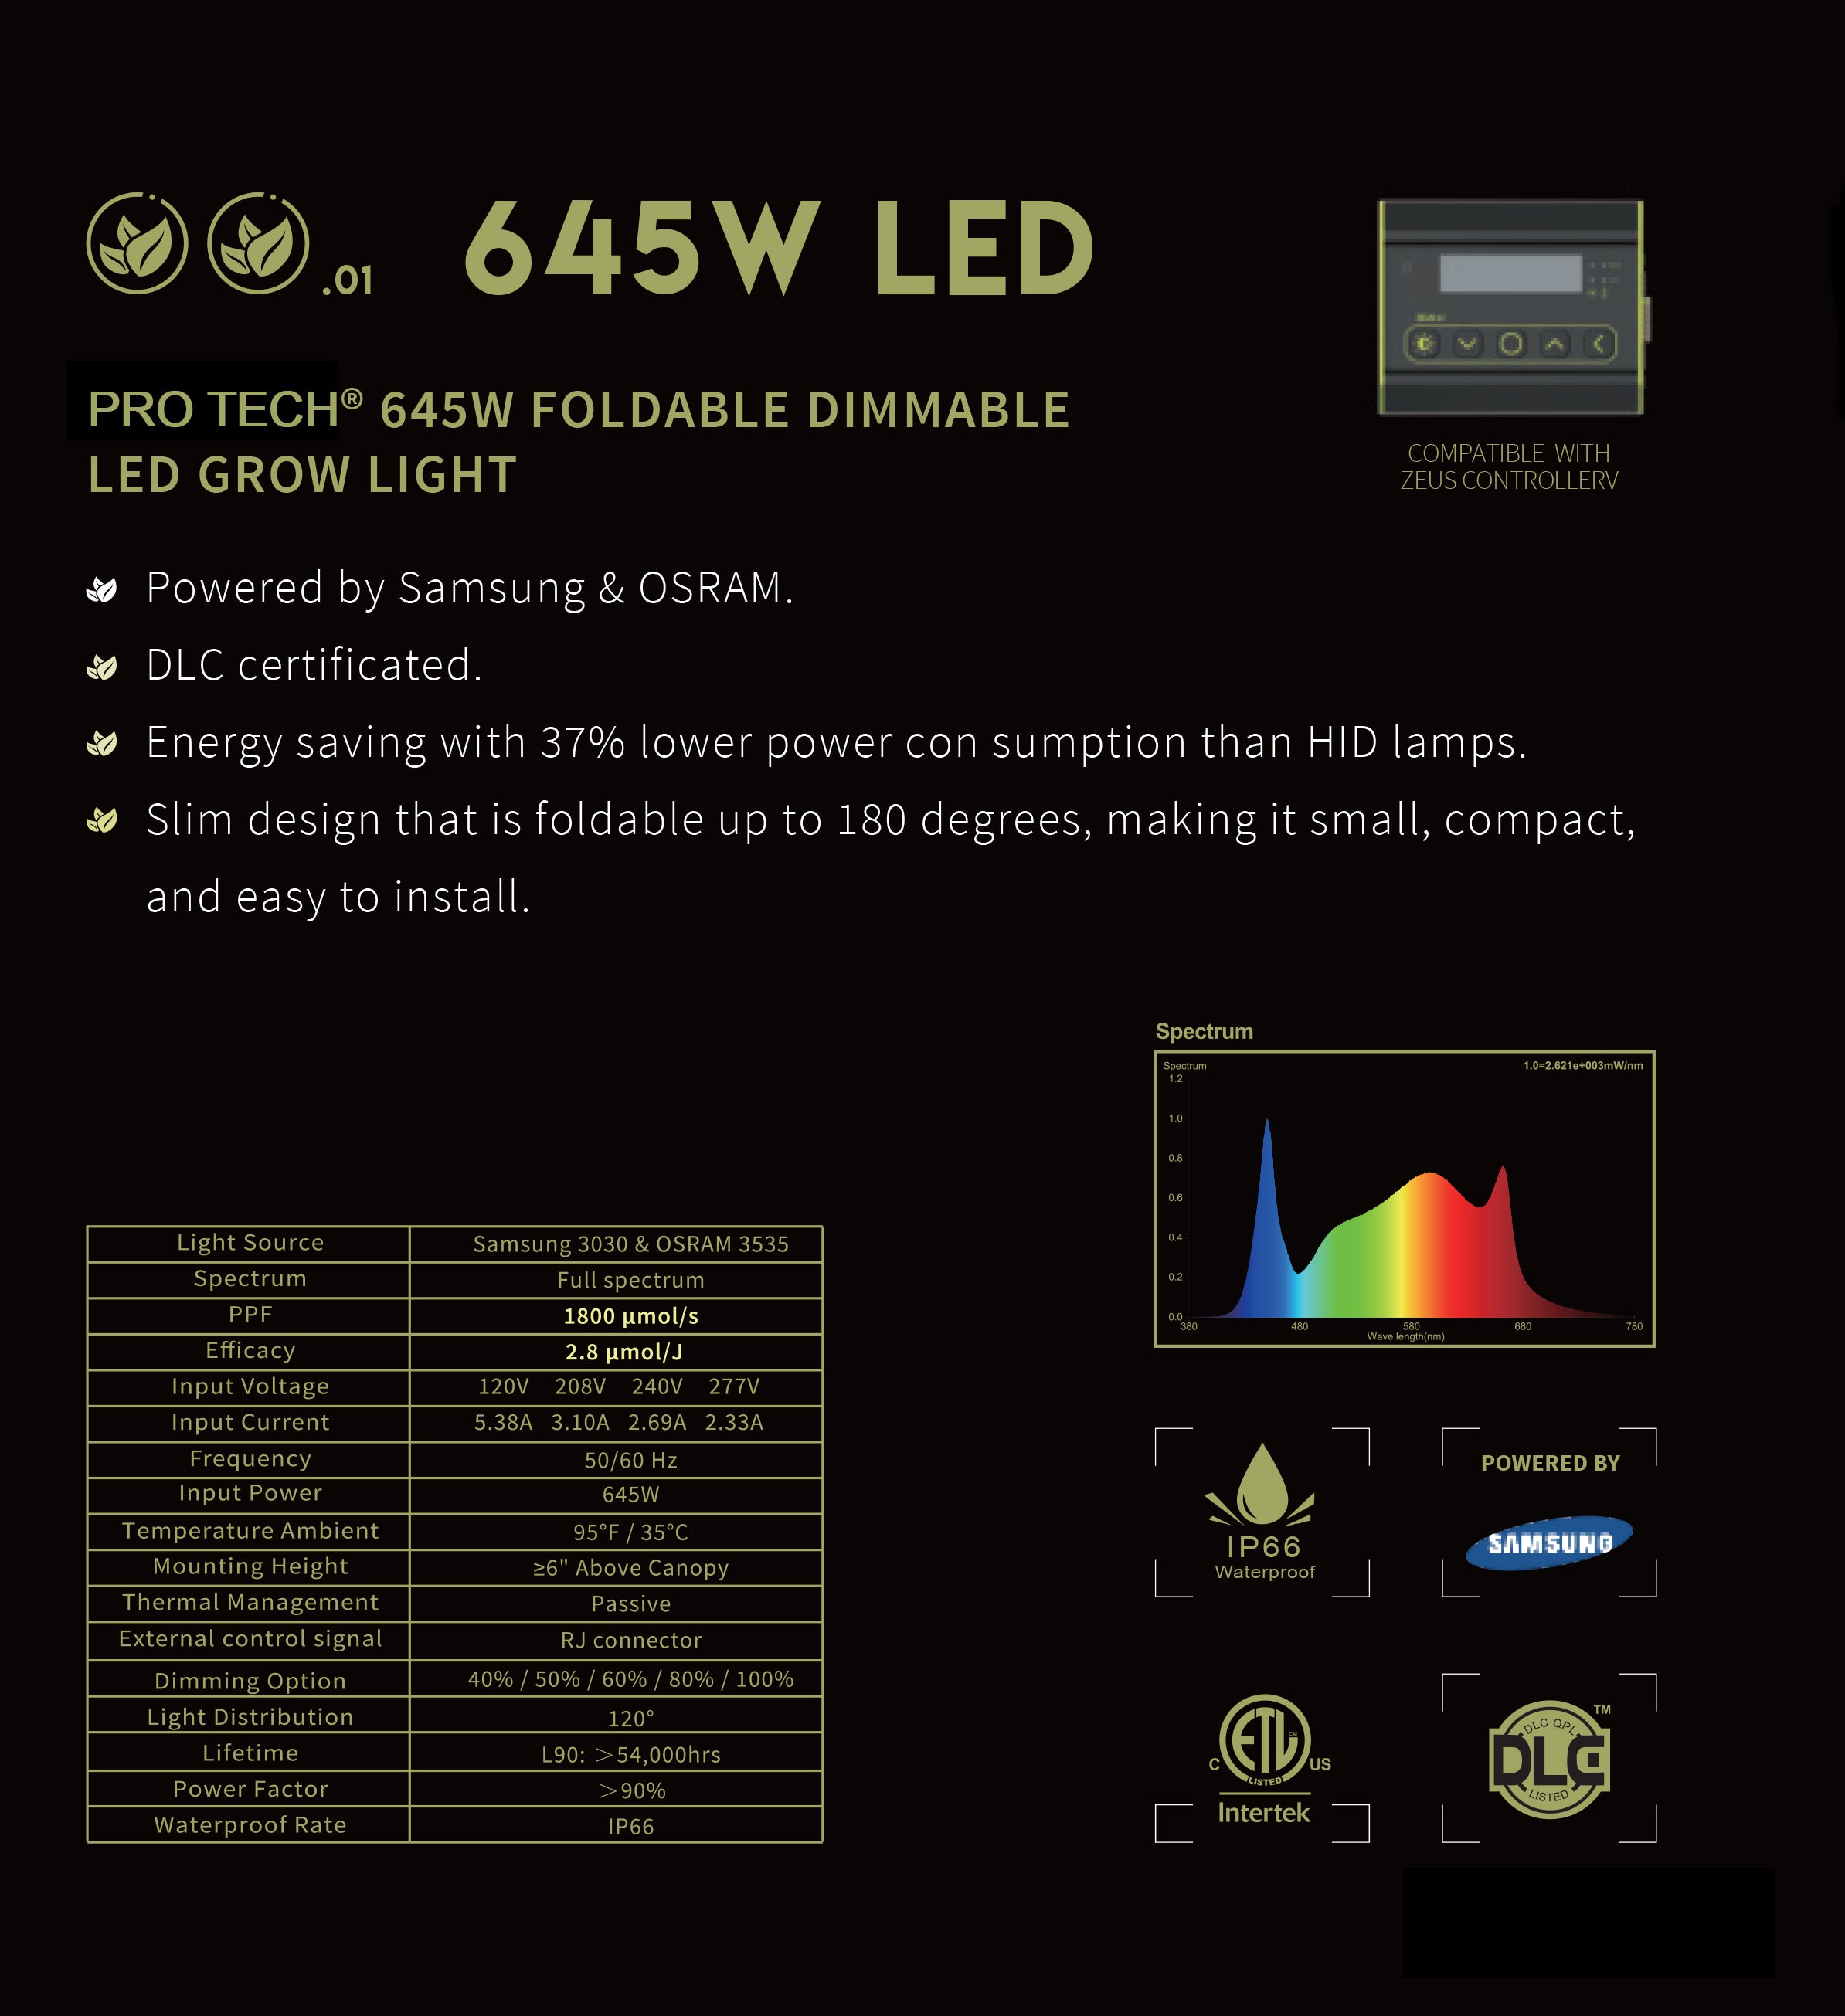 Pro Tech 645w LED